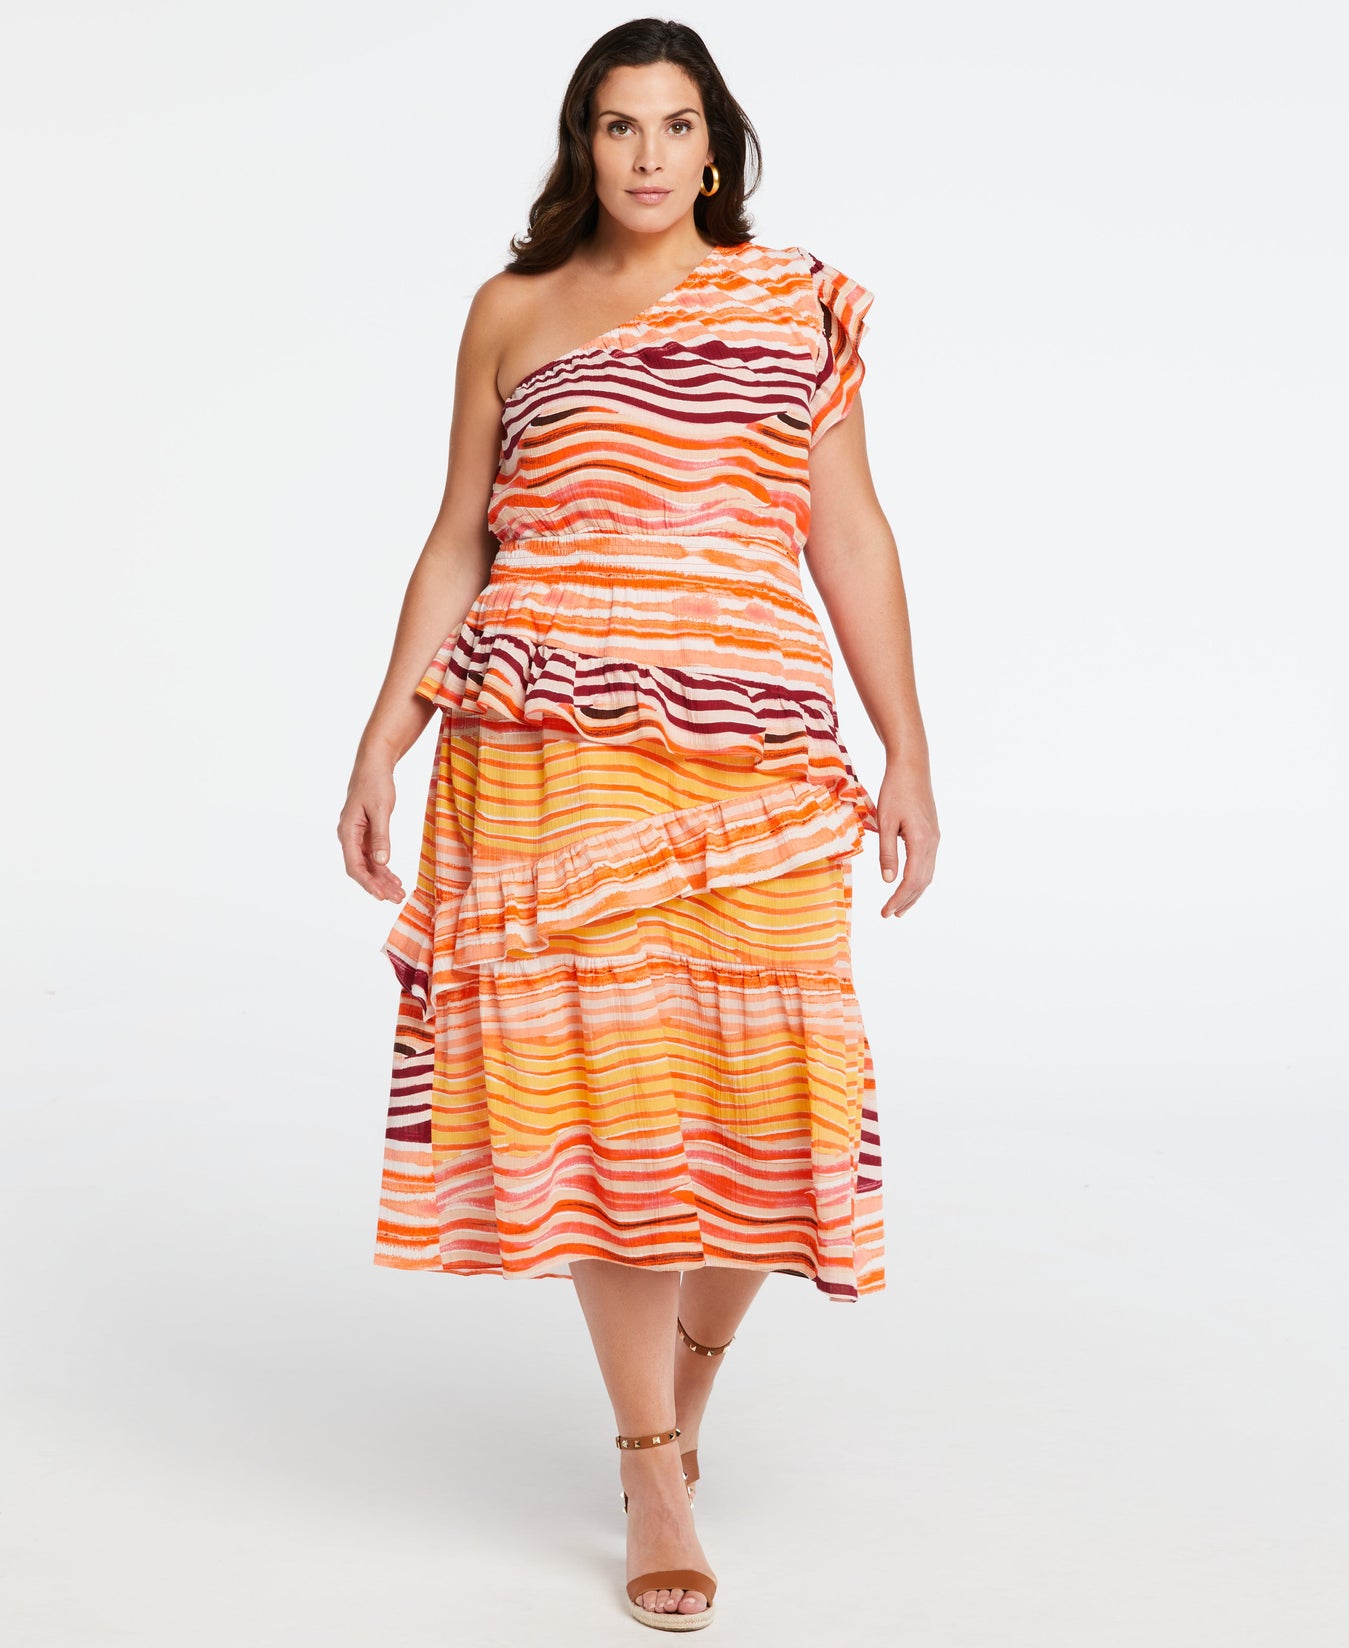 Plus Size One Shoulder Dress With Ruffled Skirt | Rafaella